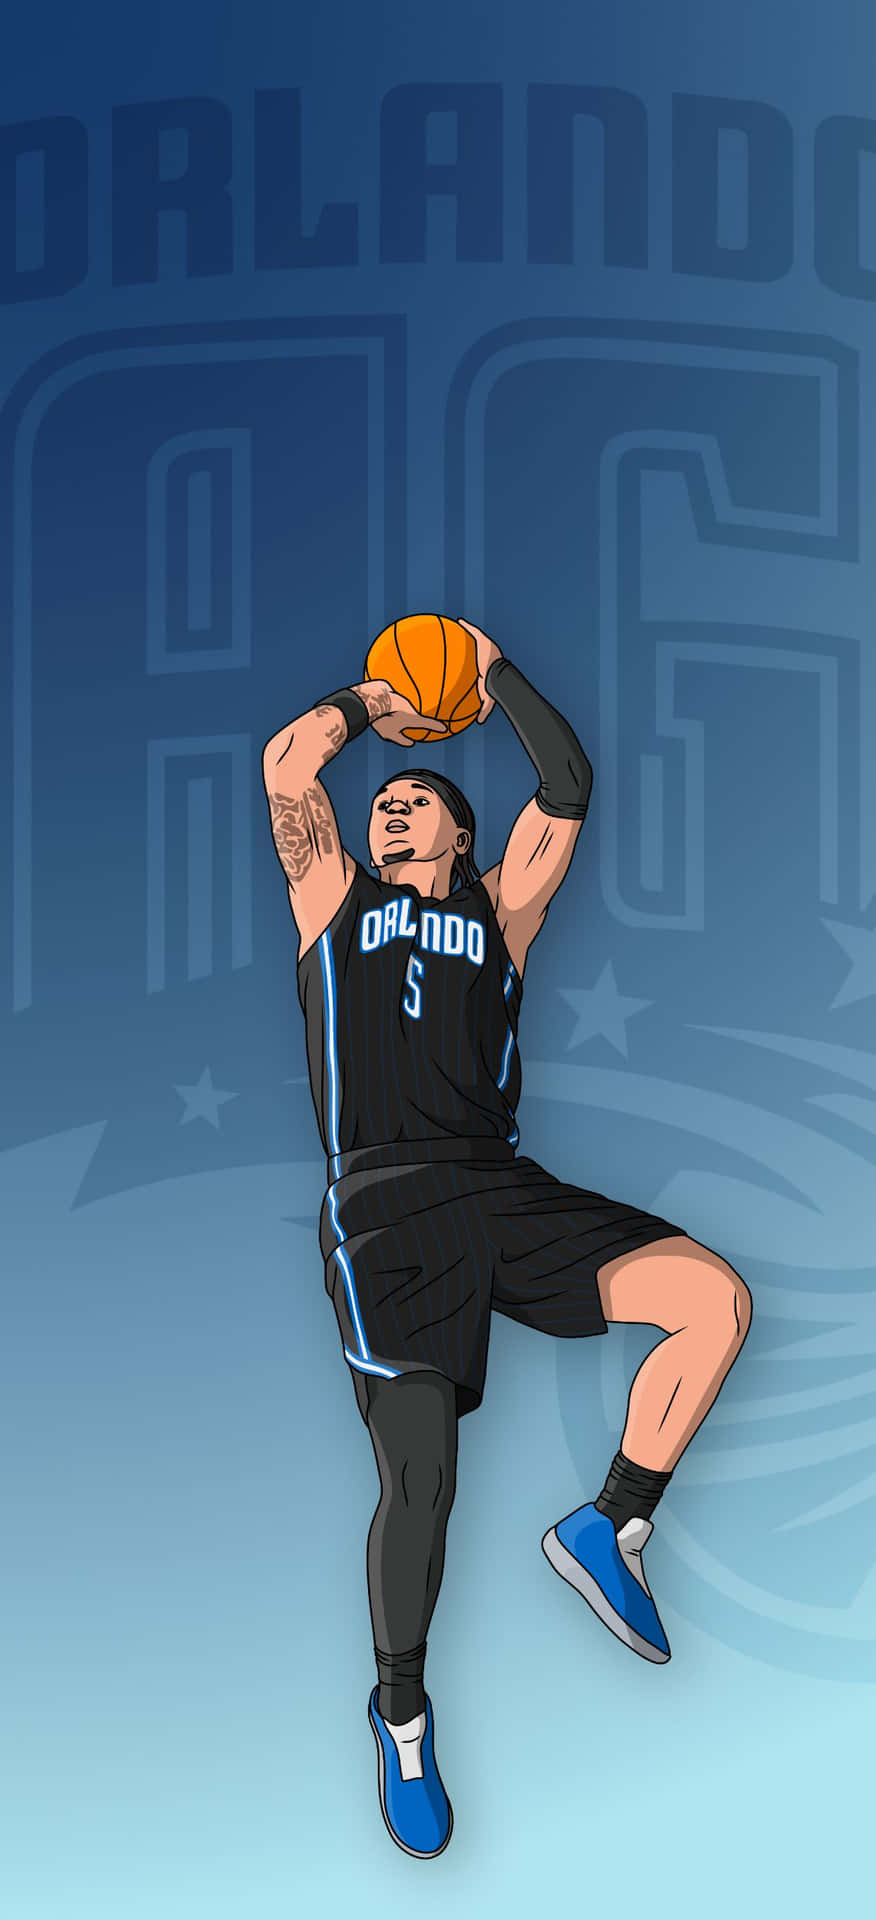 Orlando Basketball Player Dunk Illustration Wallpaper